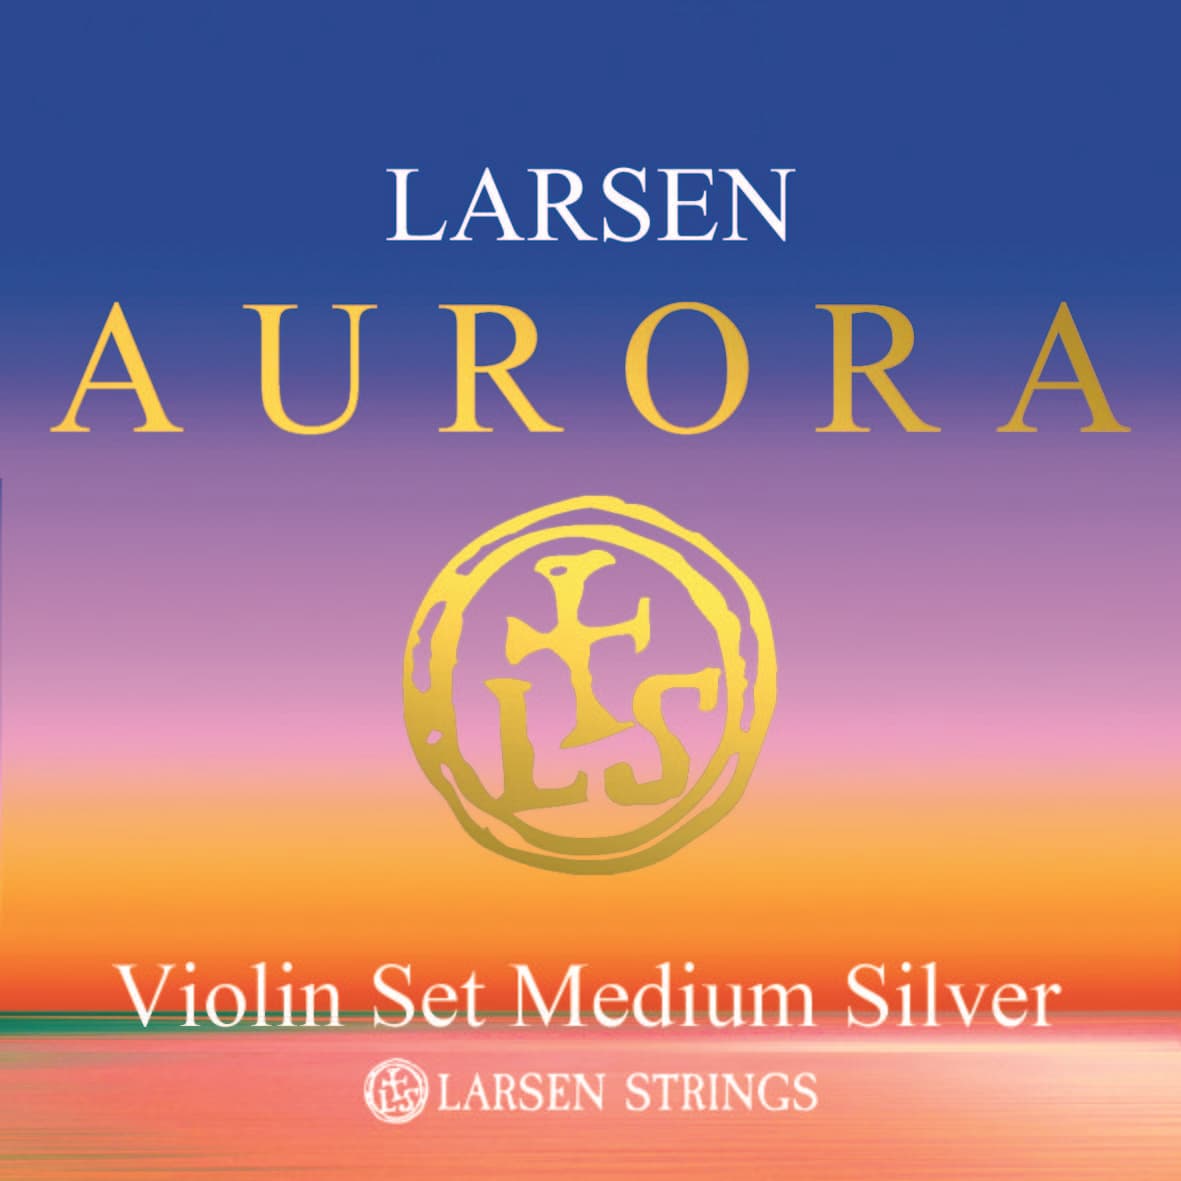 Larsen Aurora Violin Set with Silver D string 4/4 Medium